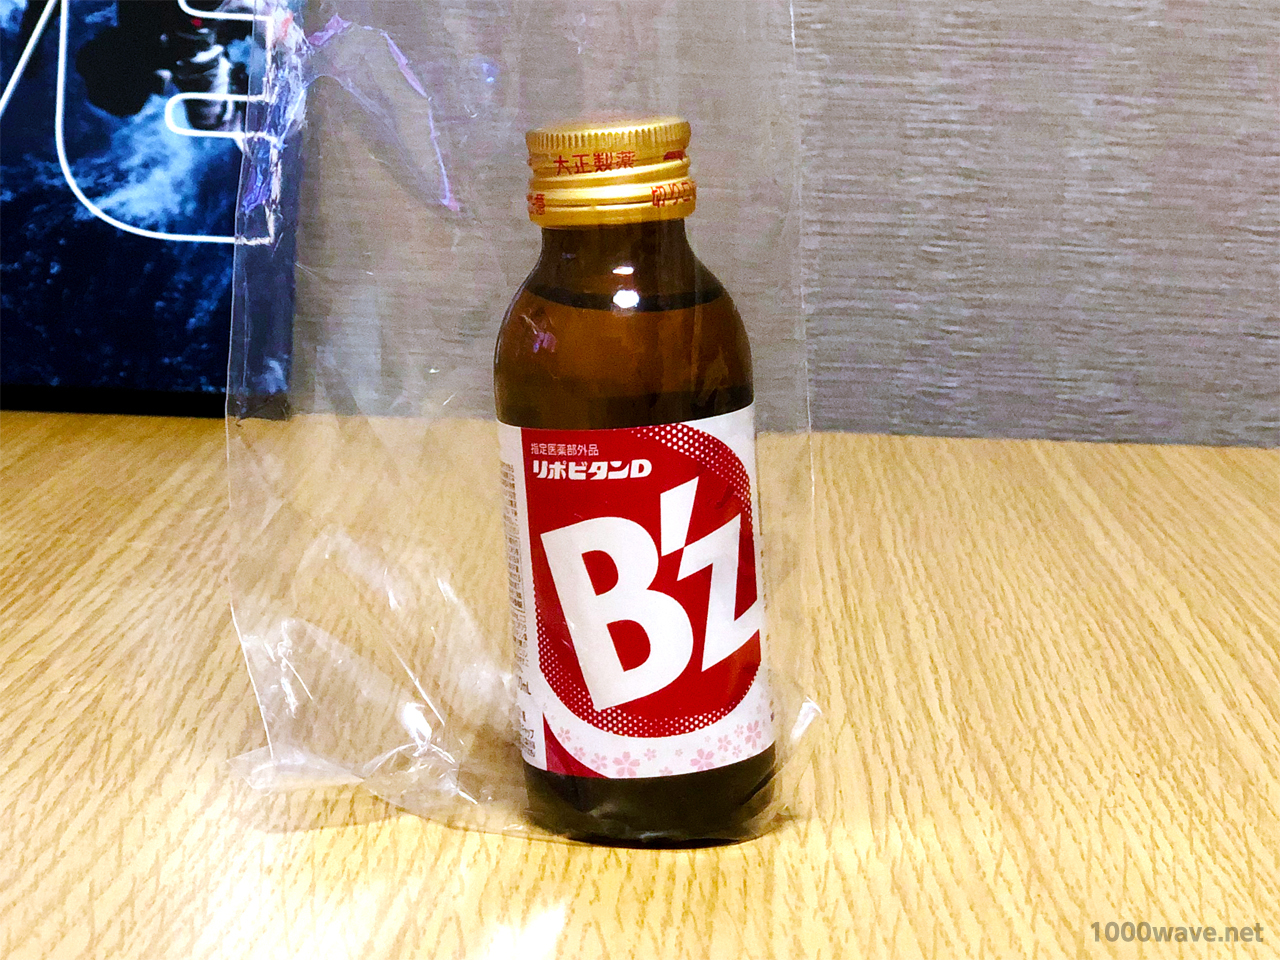 B'z NEW LOVE店頭DAY抽選会購入特典B'z×リポビタンDコラボ限定ボトルのパッケージ